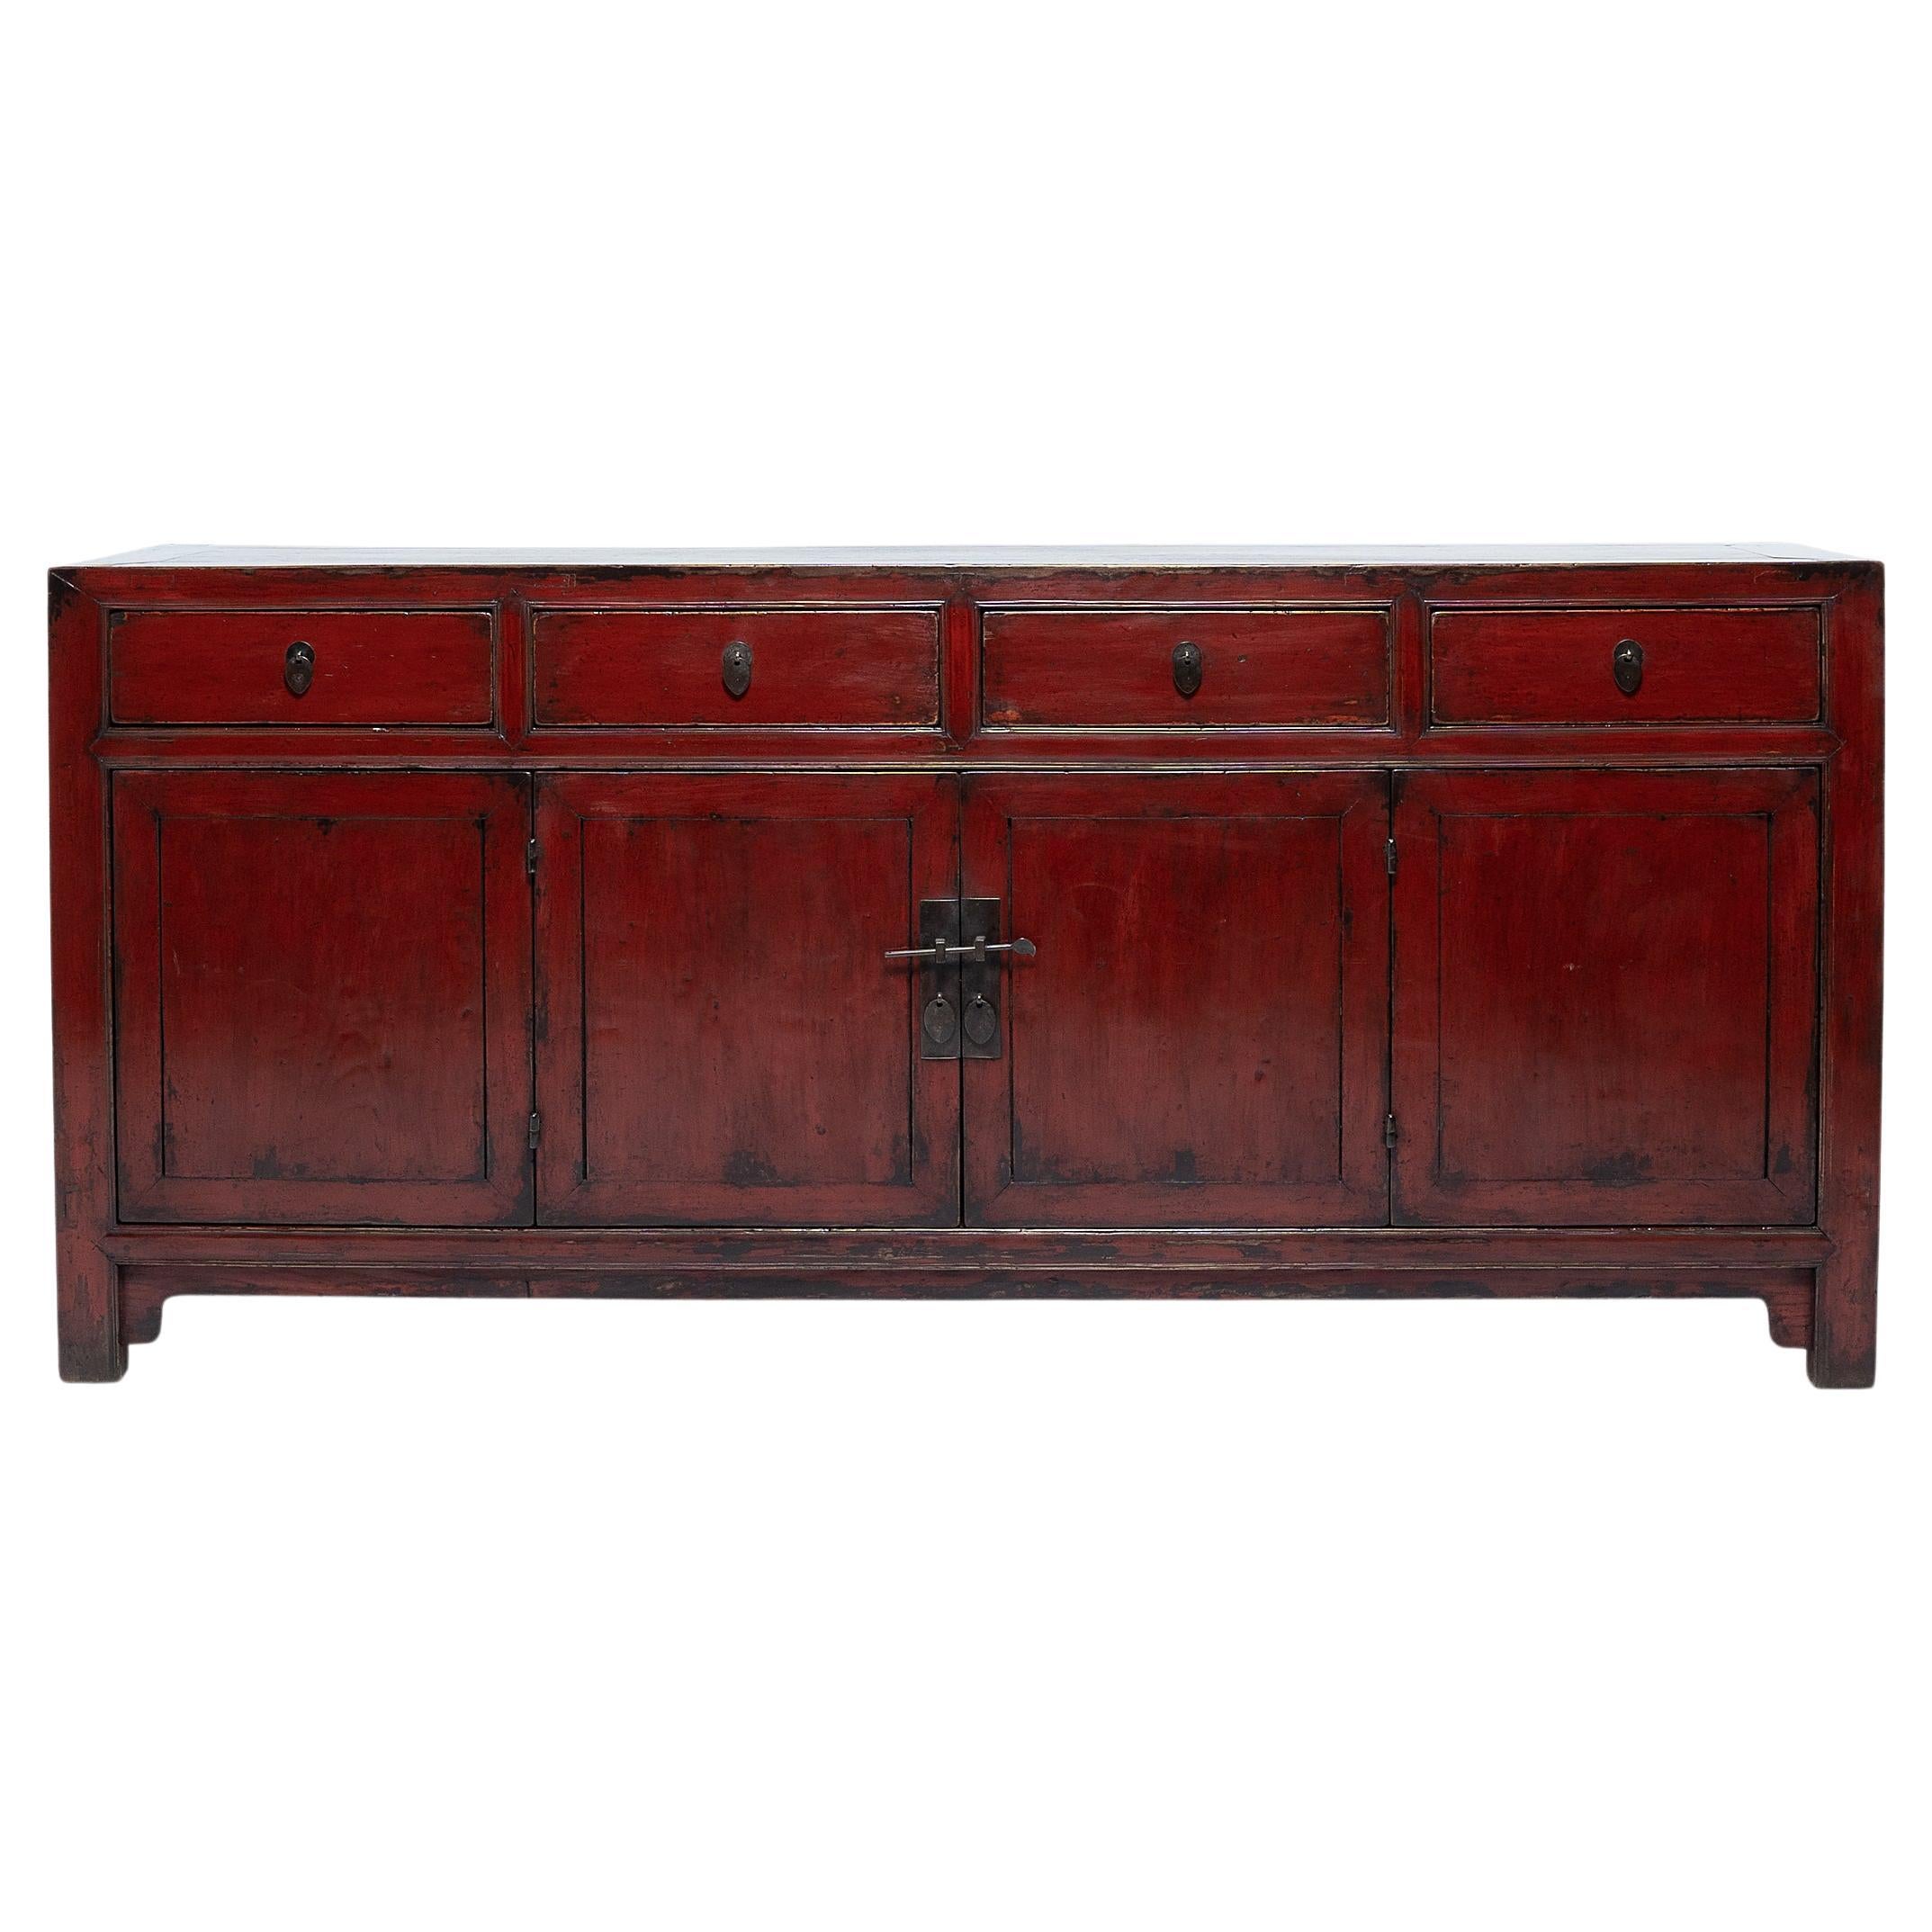 Chinese Crimson Red Lacquer Coffer, circa 1800